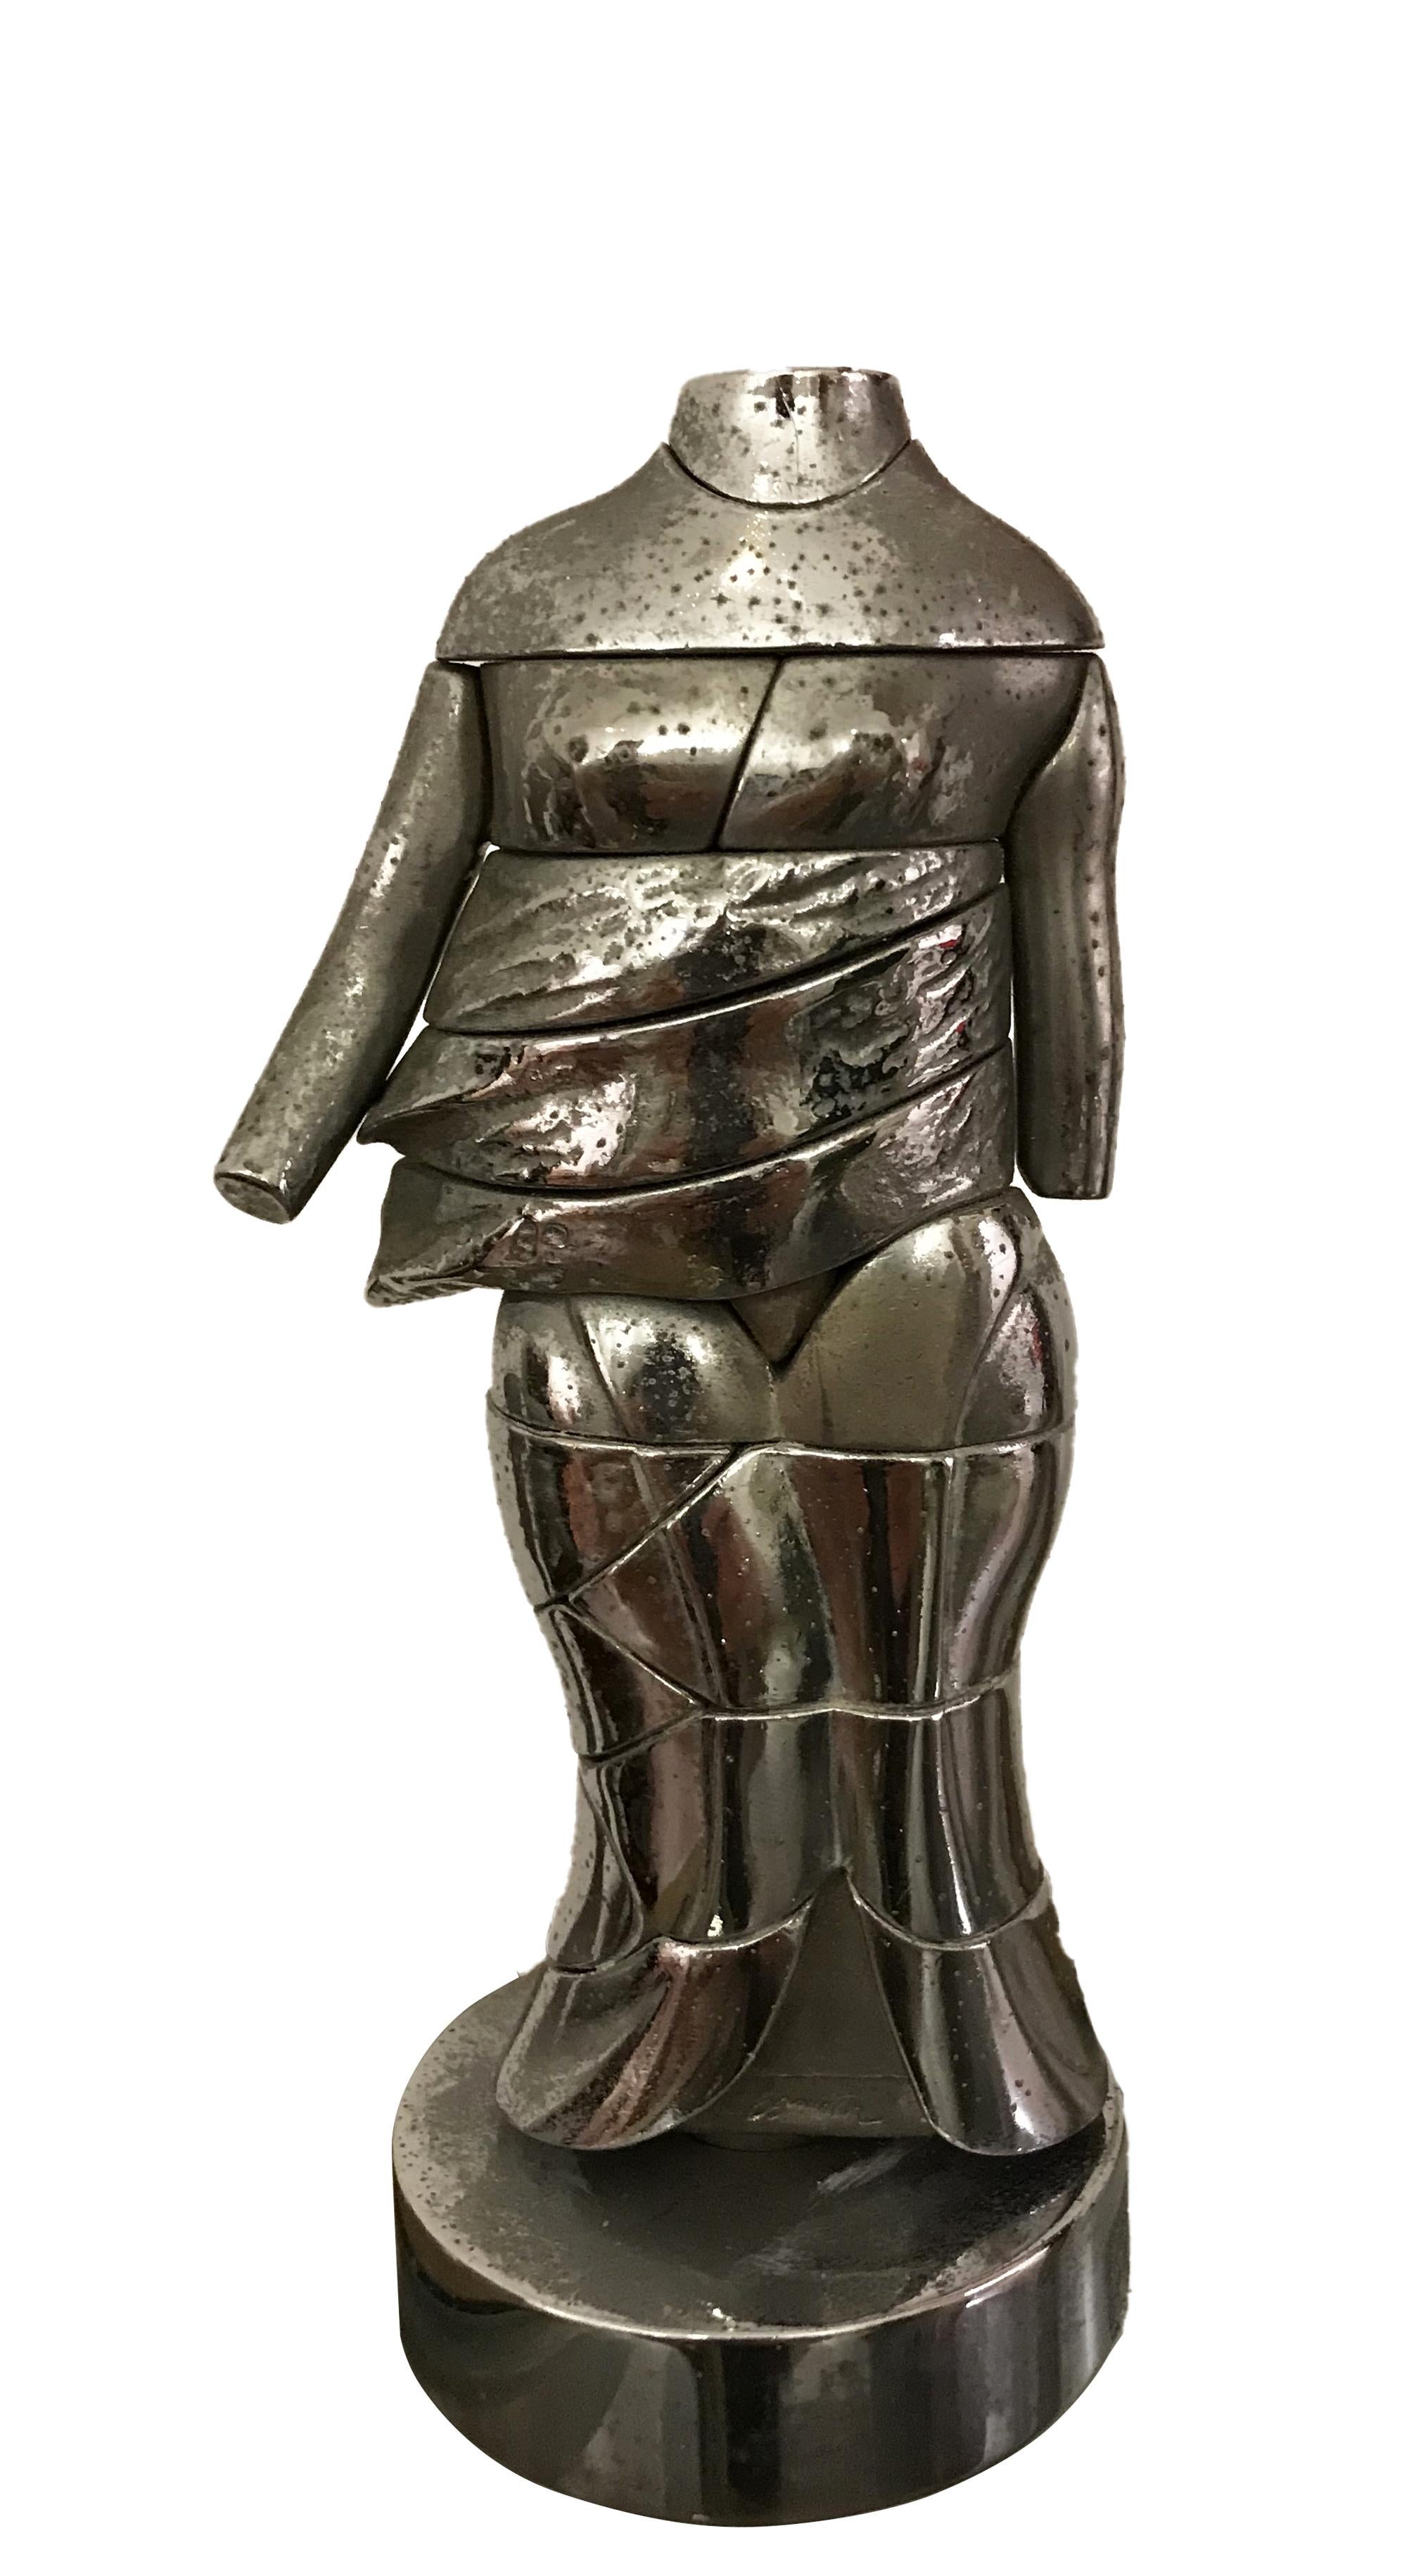 Miguel Berrocal Nude Sculpture - Minicariatide - Bronze Sculpture by M. Berrocal - 1960s